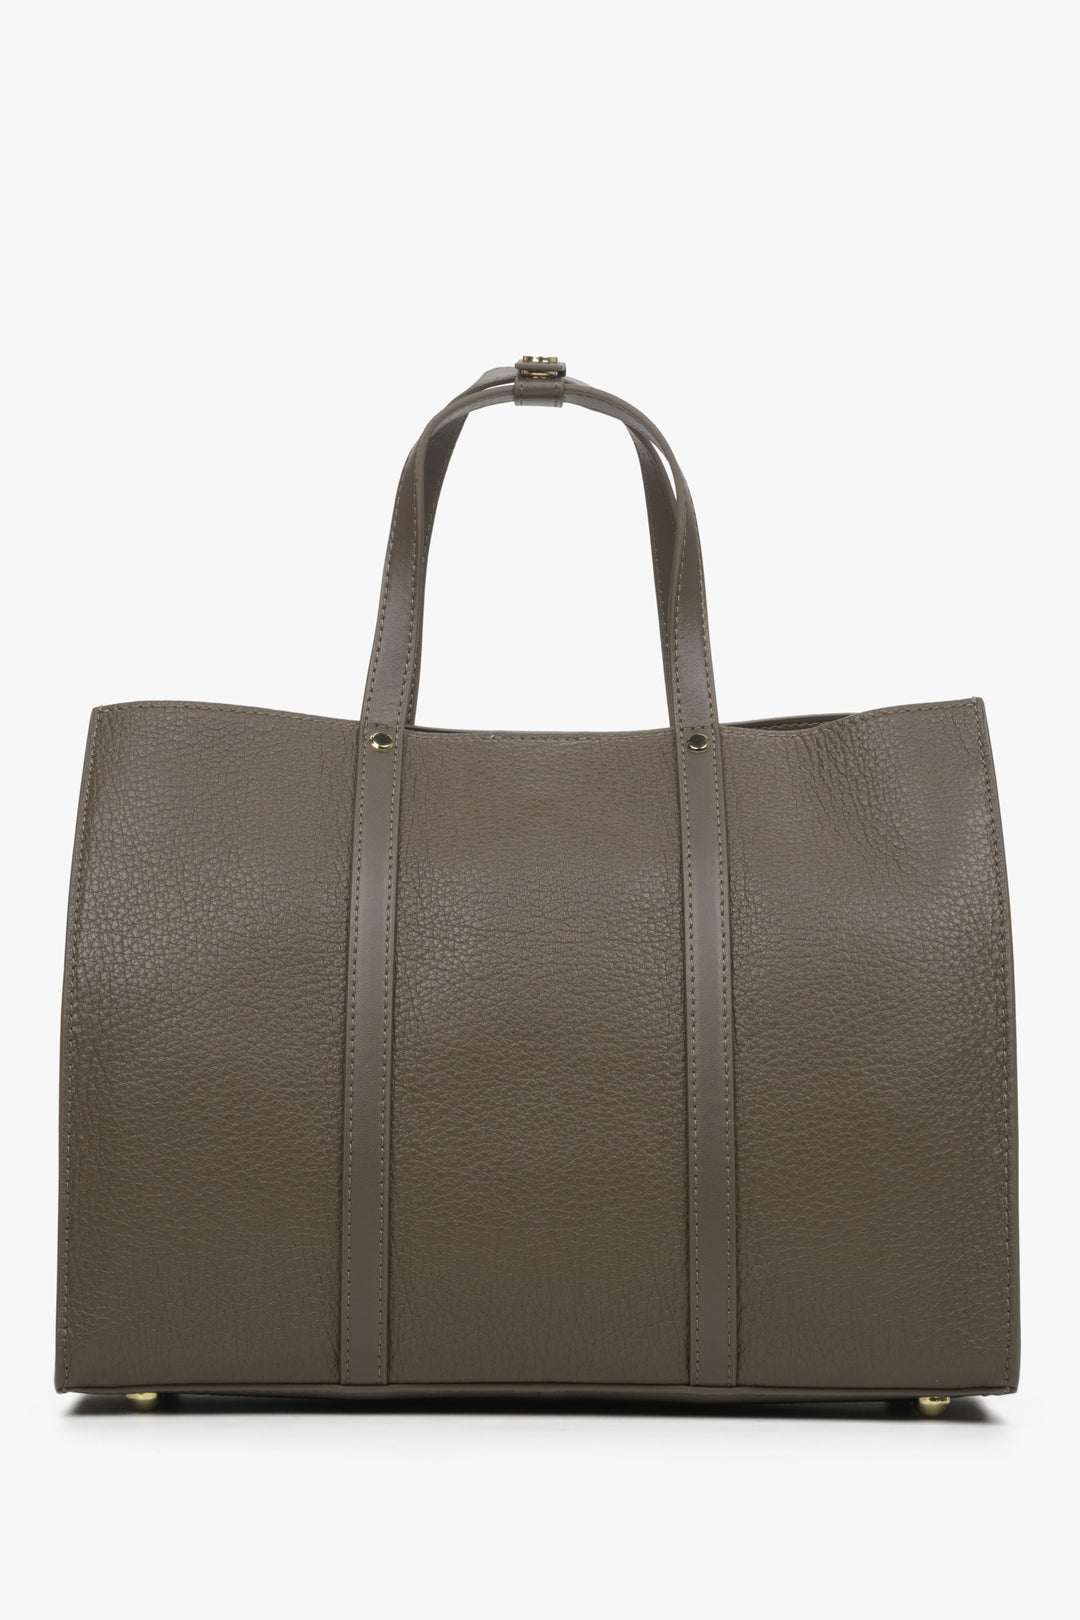 Estro women's  brown leather shopper bag.